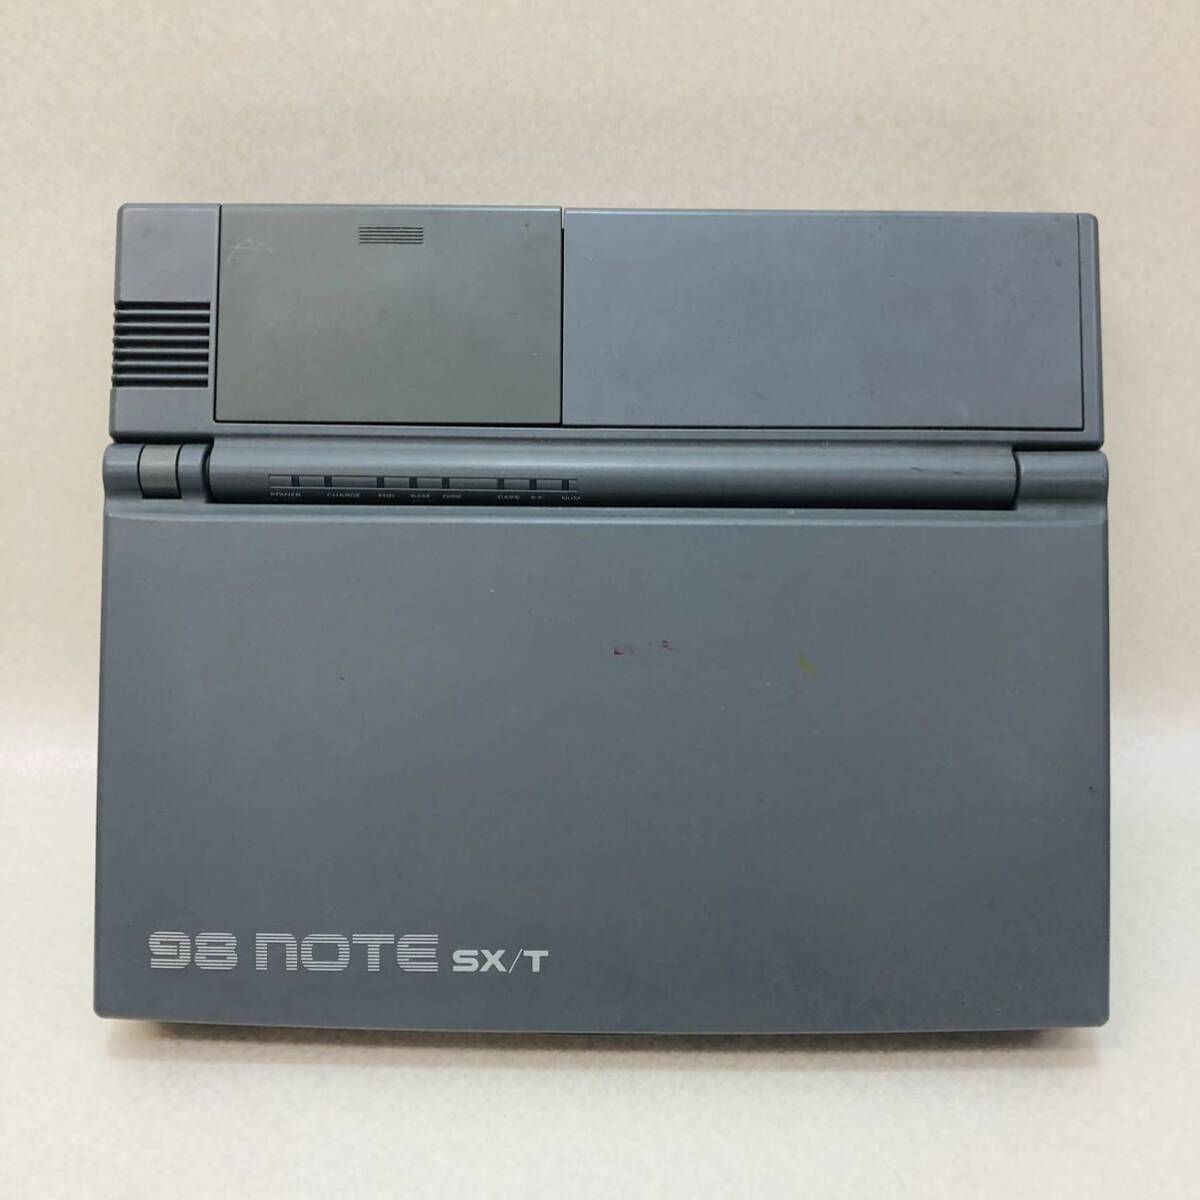 C4016* б/у товар * ноутбук NEC PC-9801 NS/T работоспособность не проверялась б/у товар 